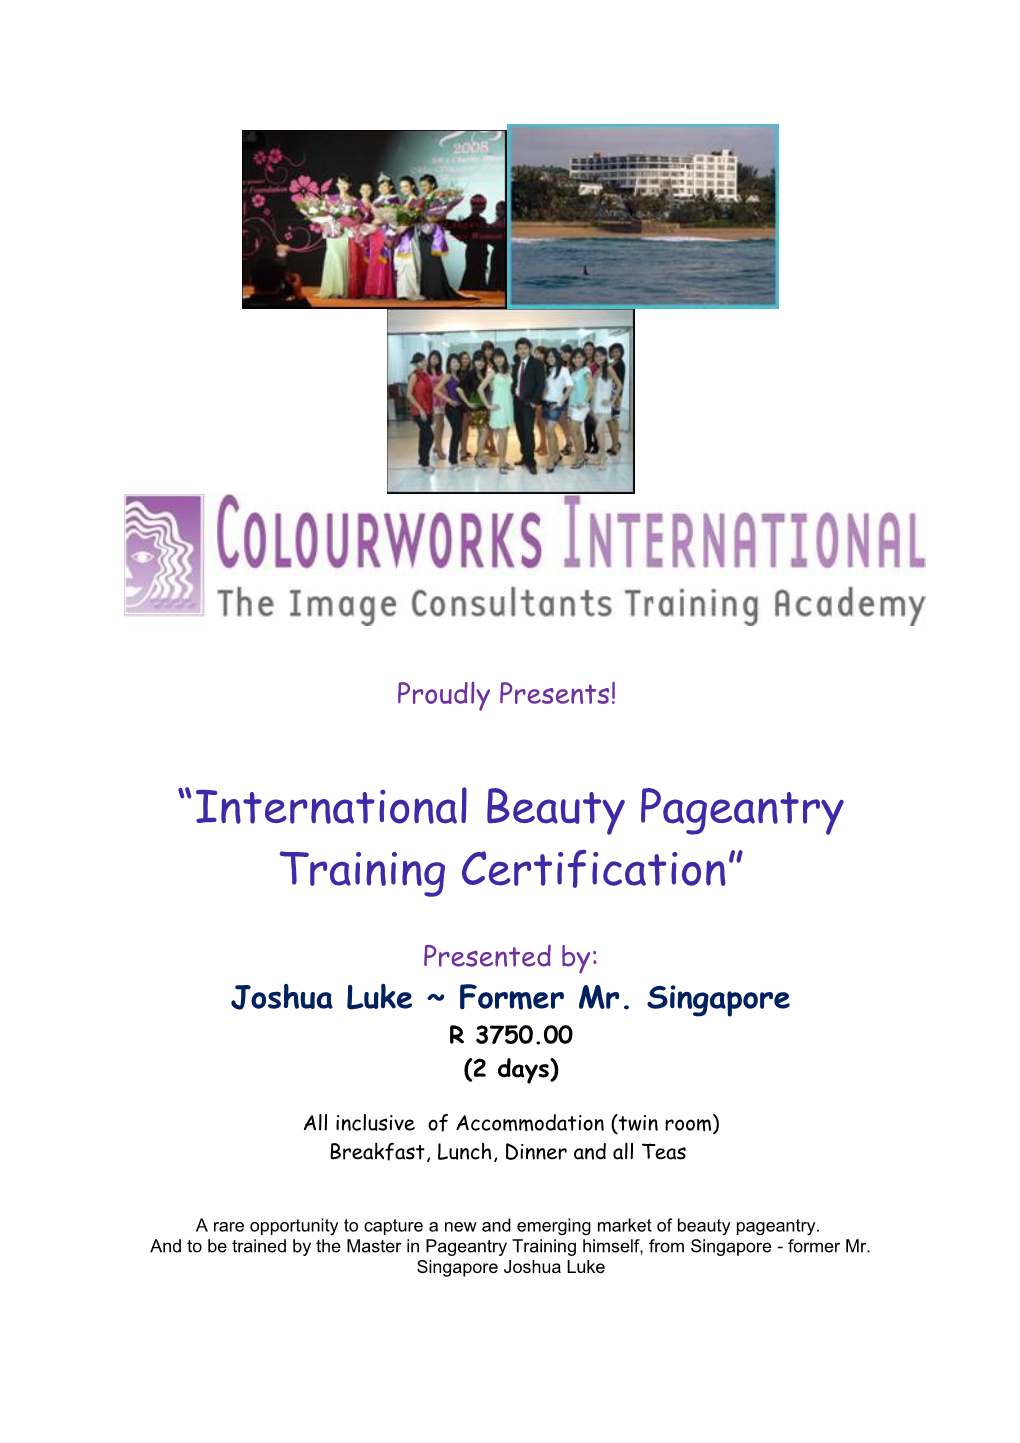 International Beauty Pageantry Training Certification